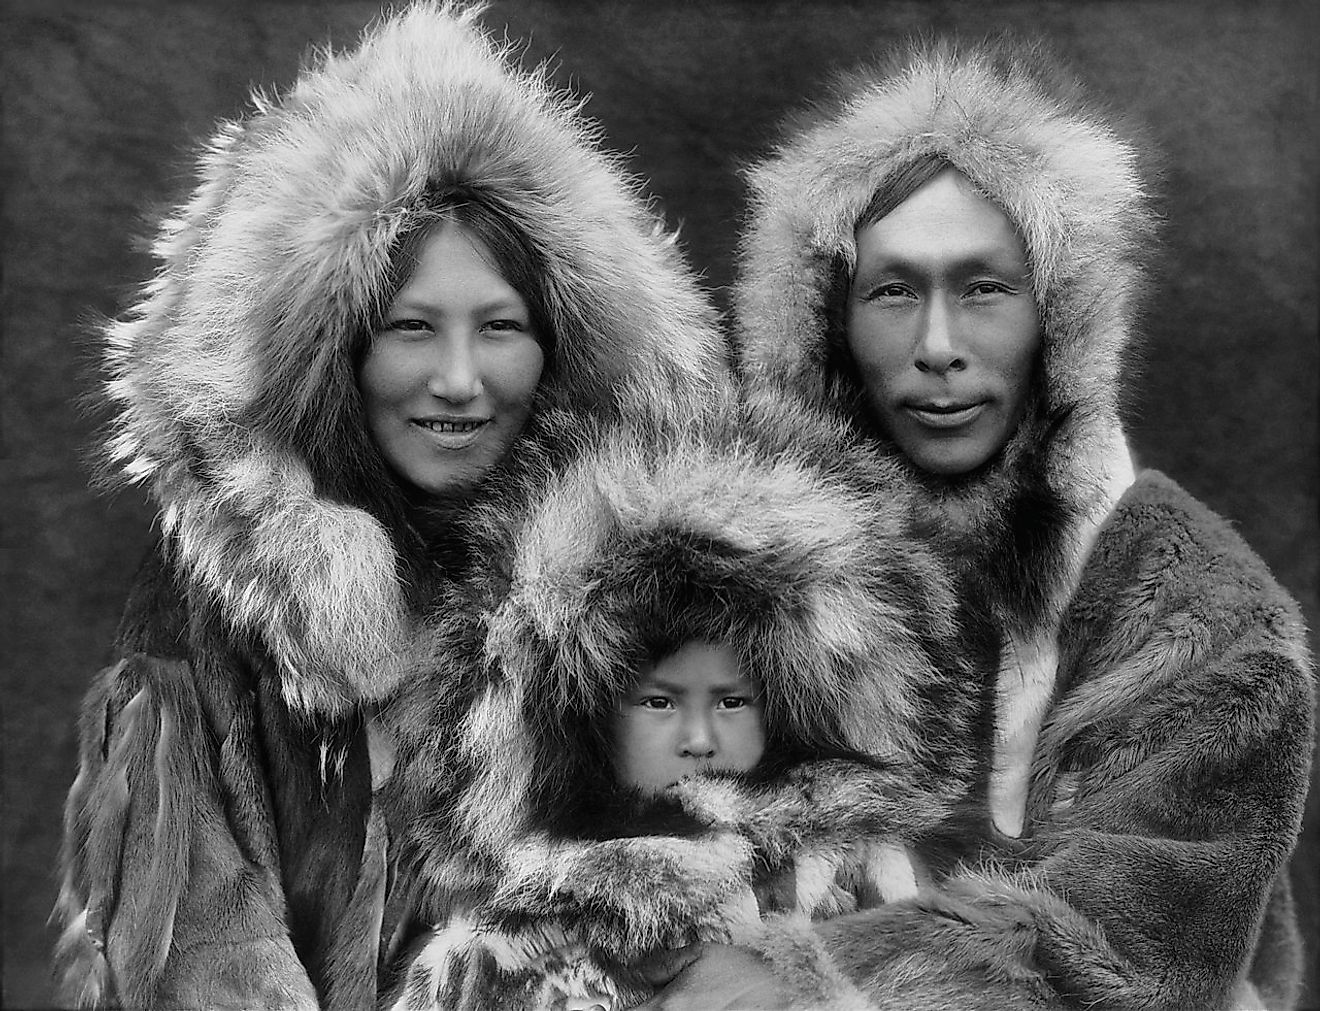 An Inupiat family from Noatak, Alaska, 1929. Image credit: Edward S. Curtis/Public domain